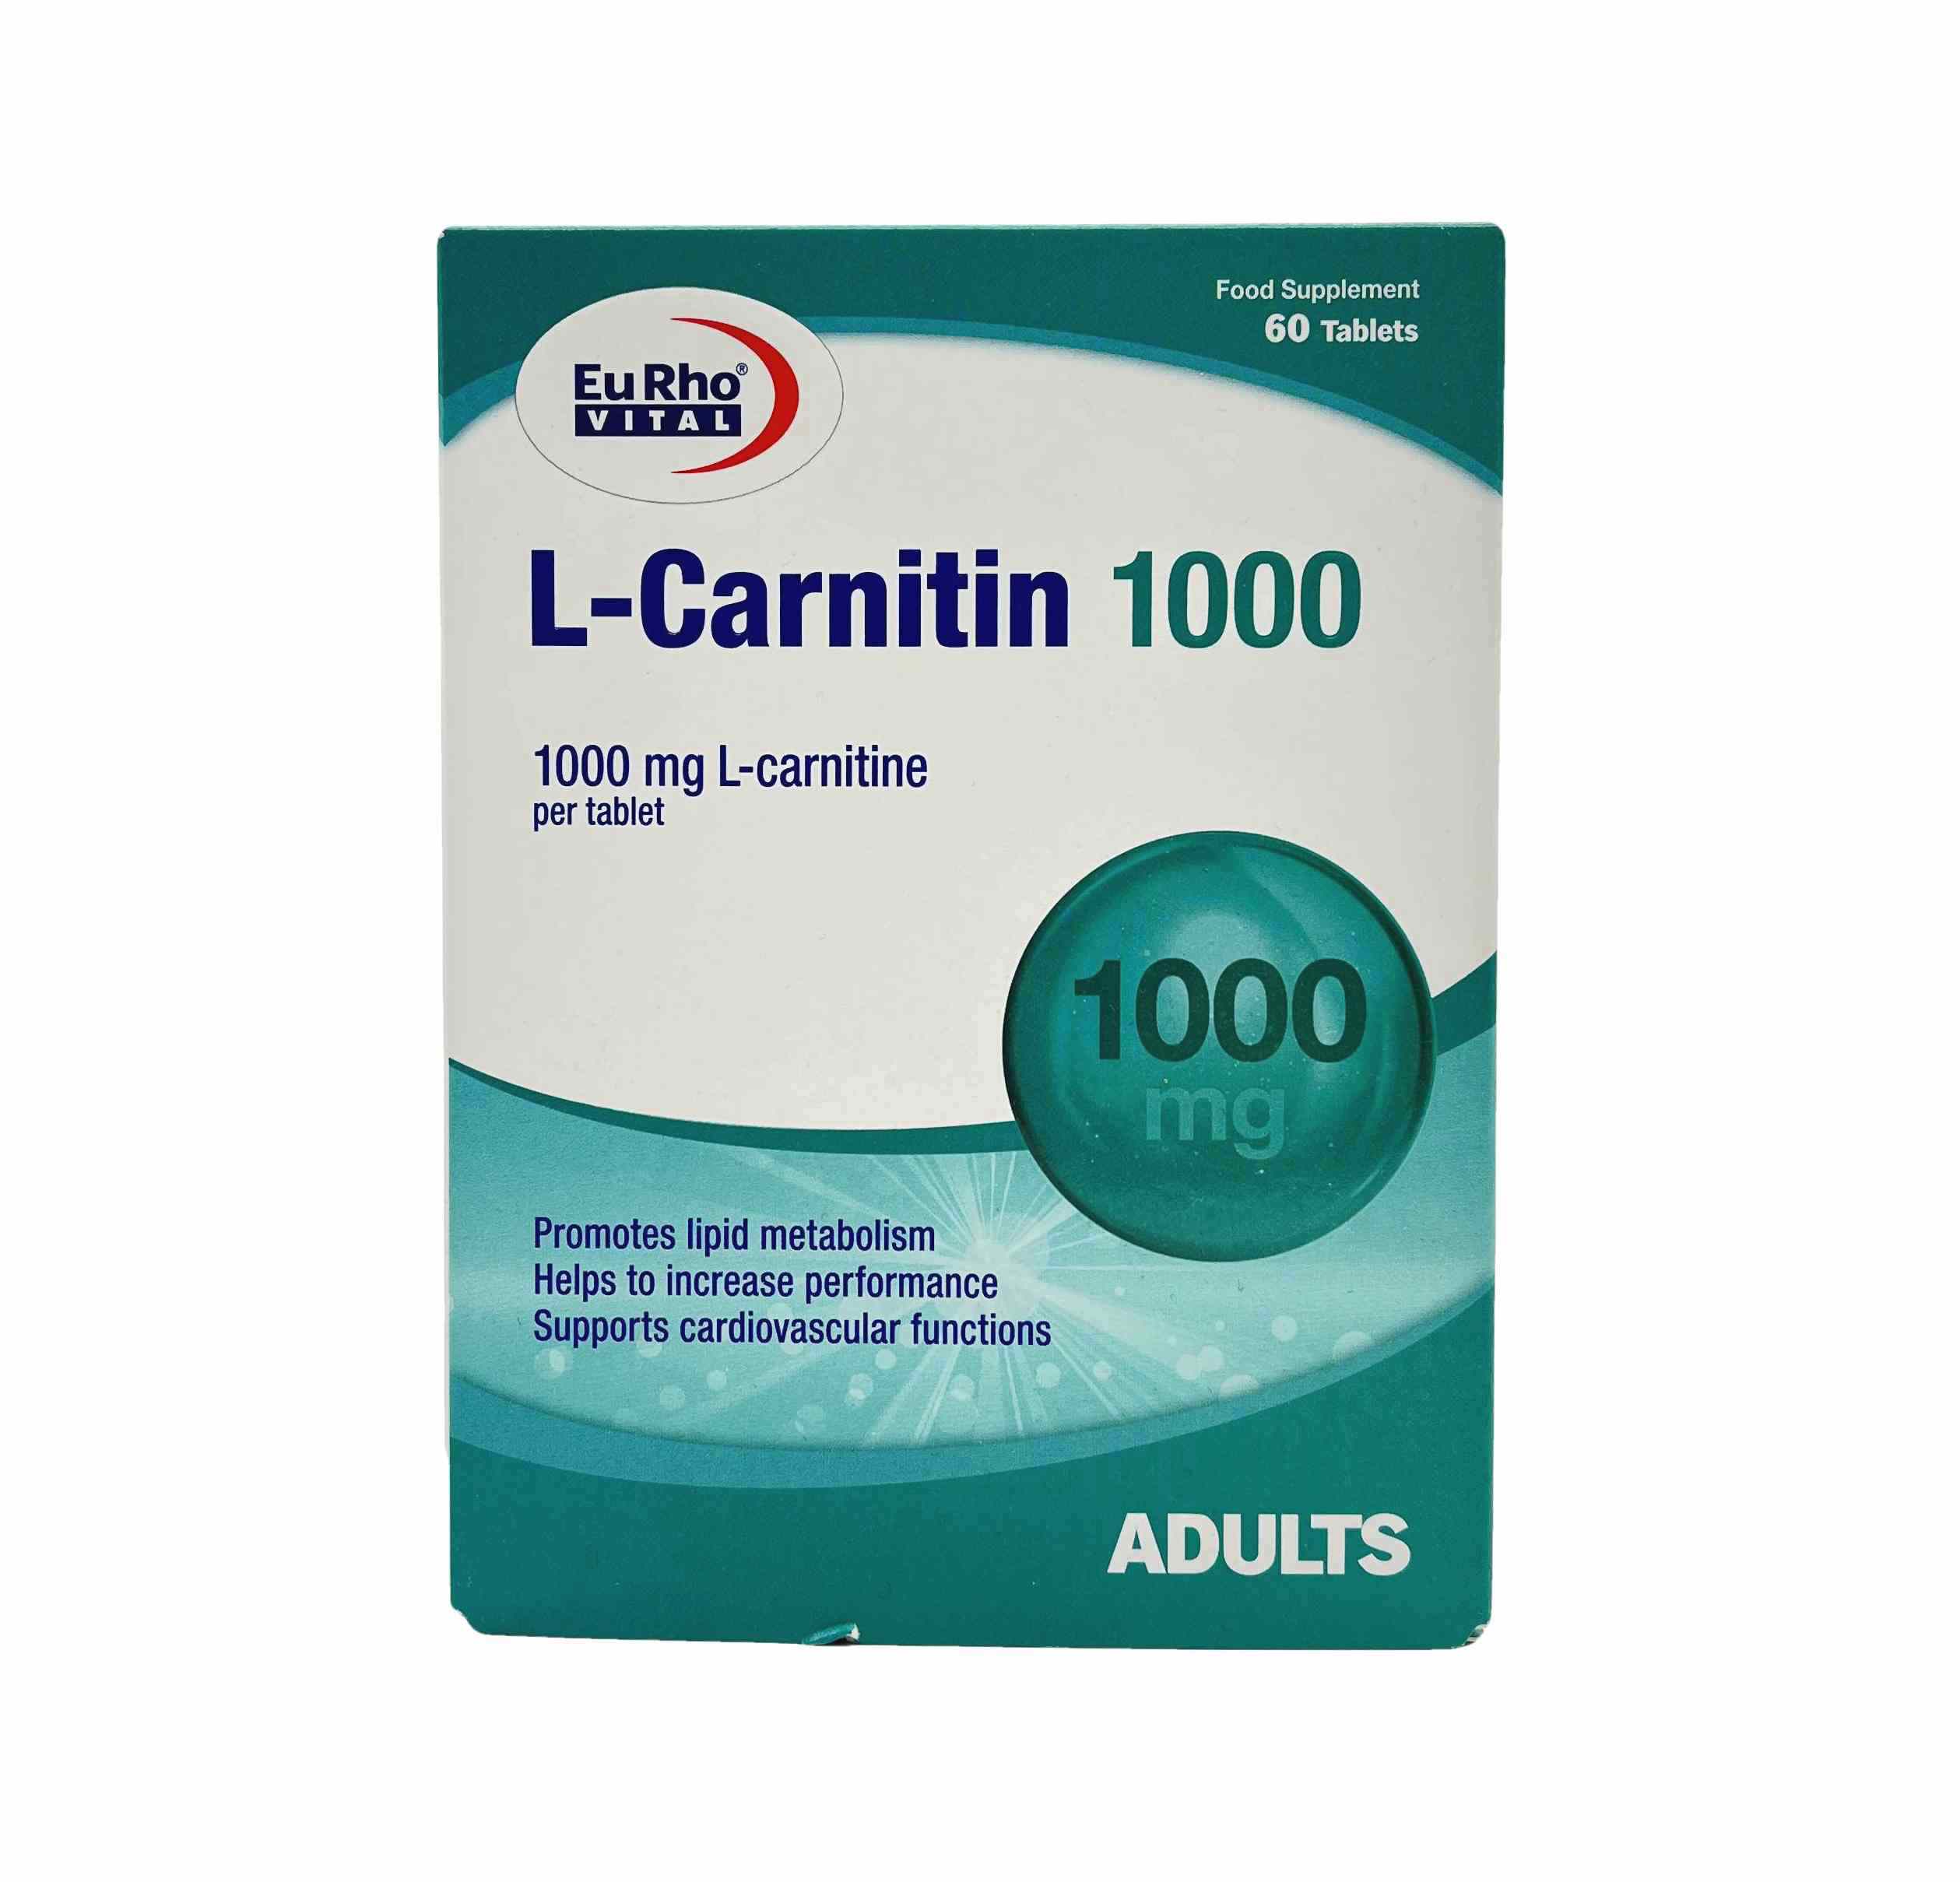 قرص ال کارنتین 1000 یوروویتال Eurhovital L-CARNITINE